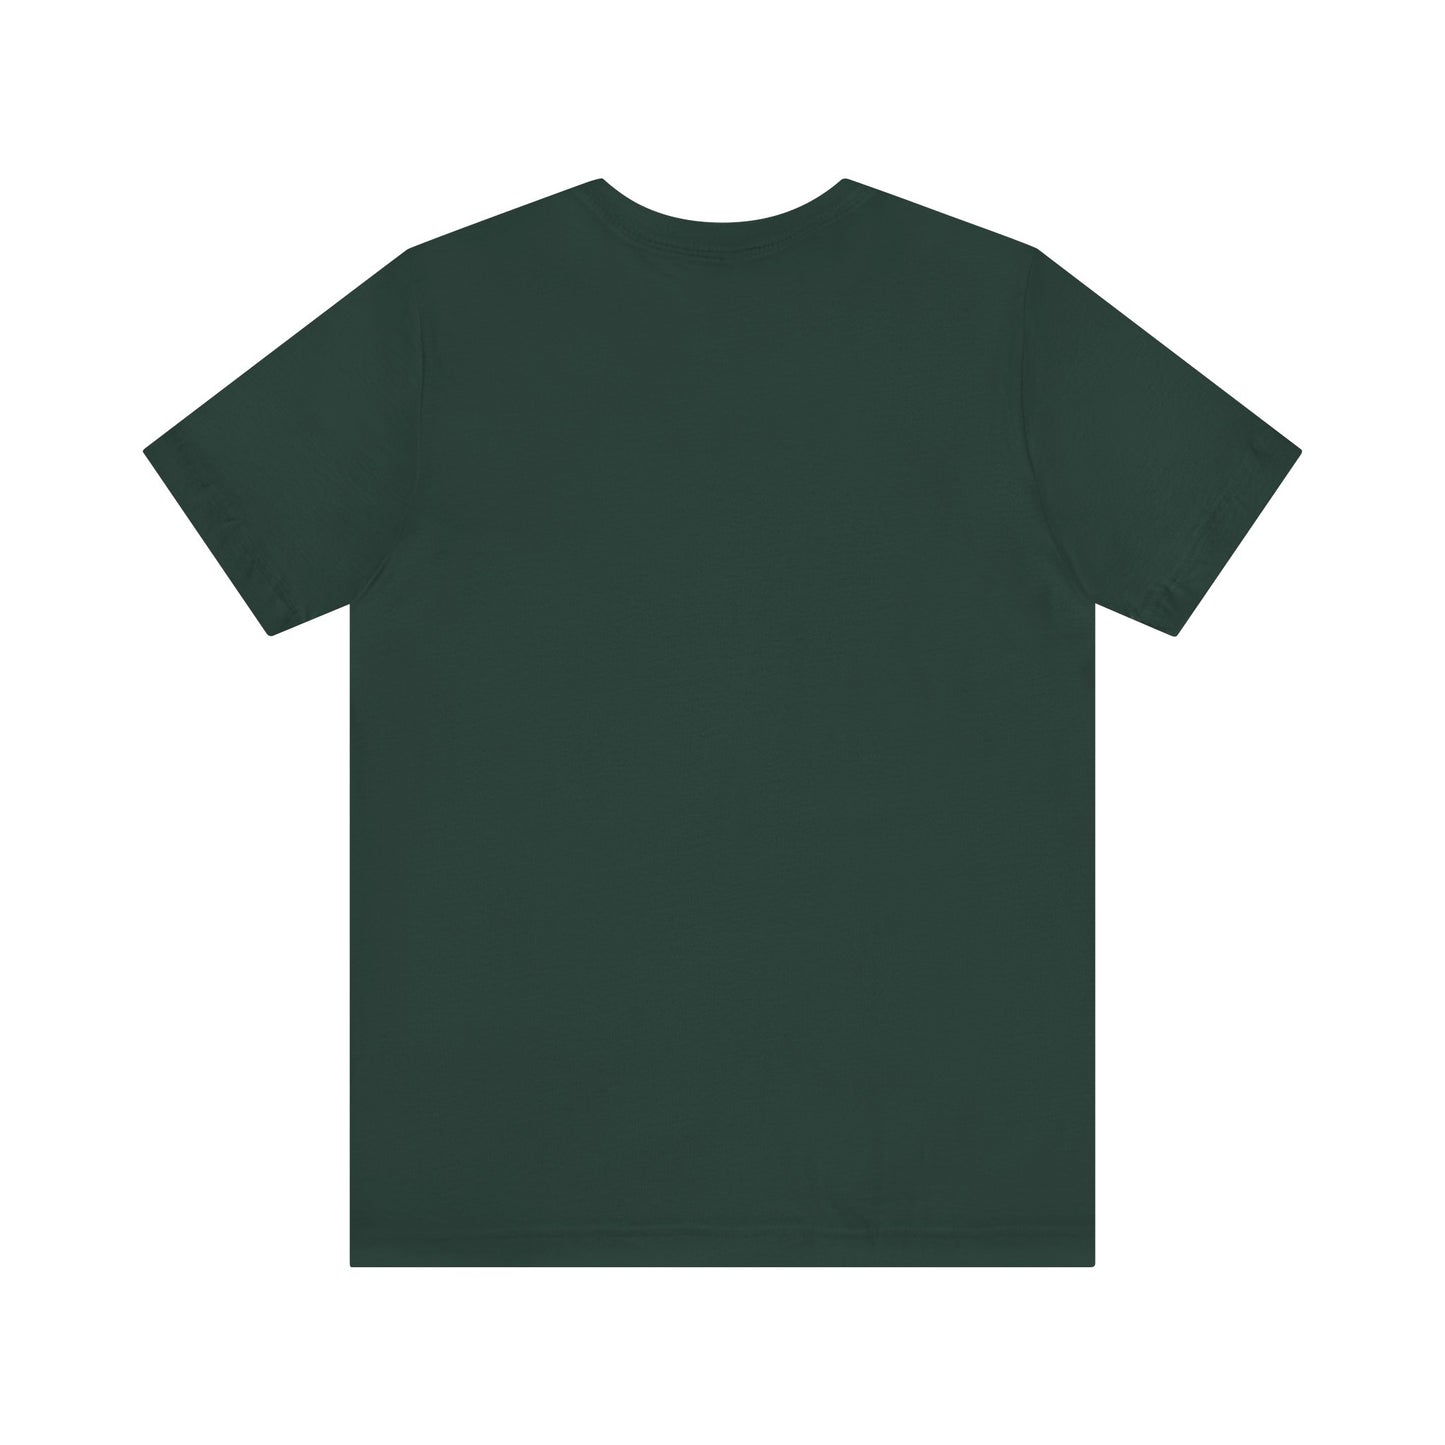 Zaporizhzhia T-shirt Unisex Jersey Short Sleeve Tee